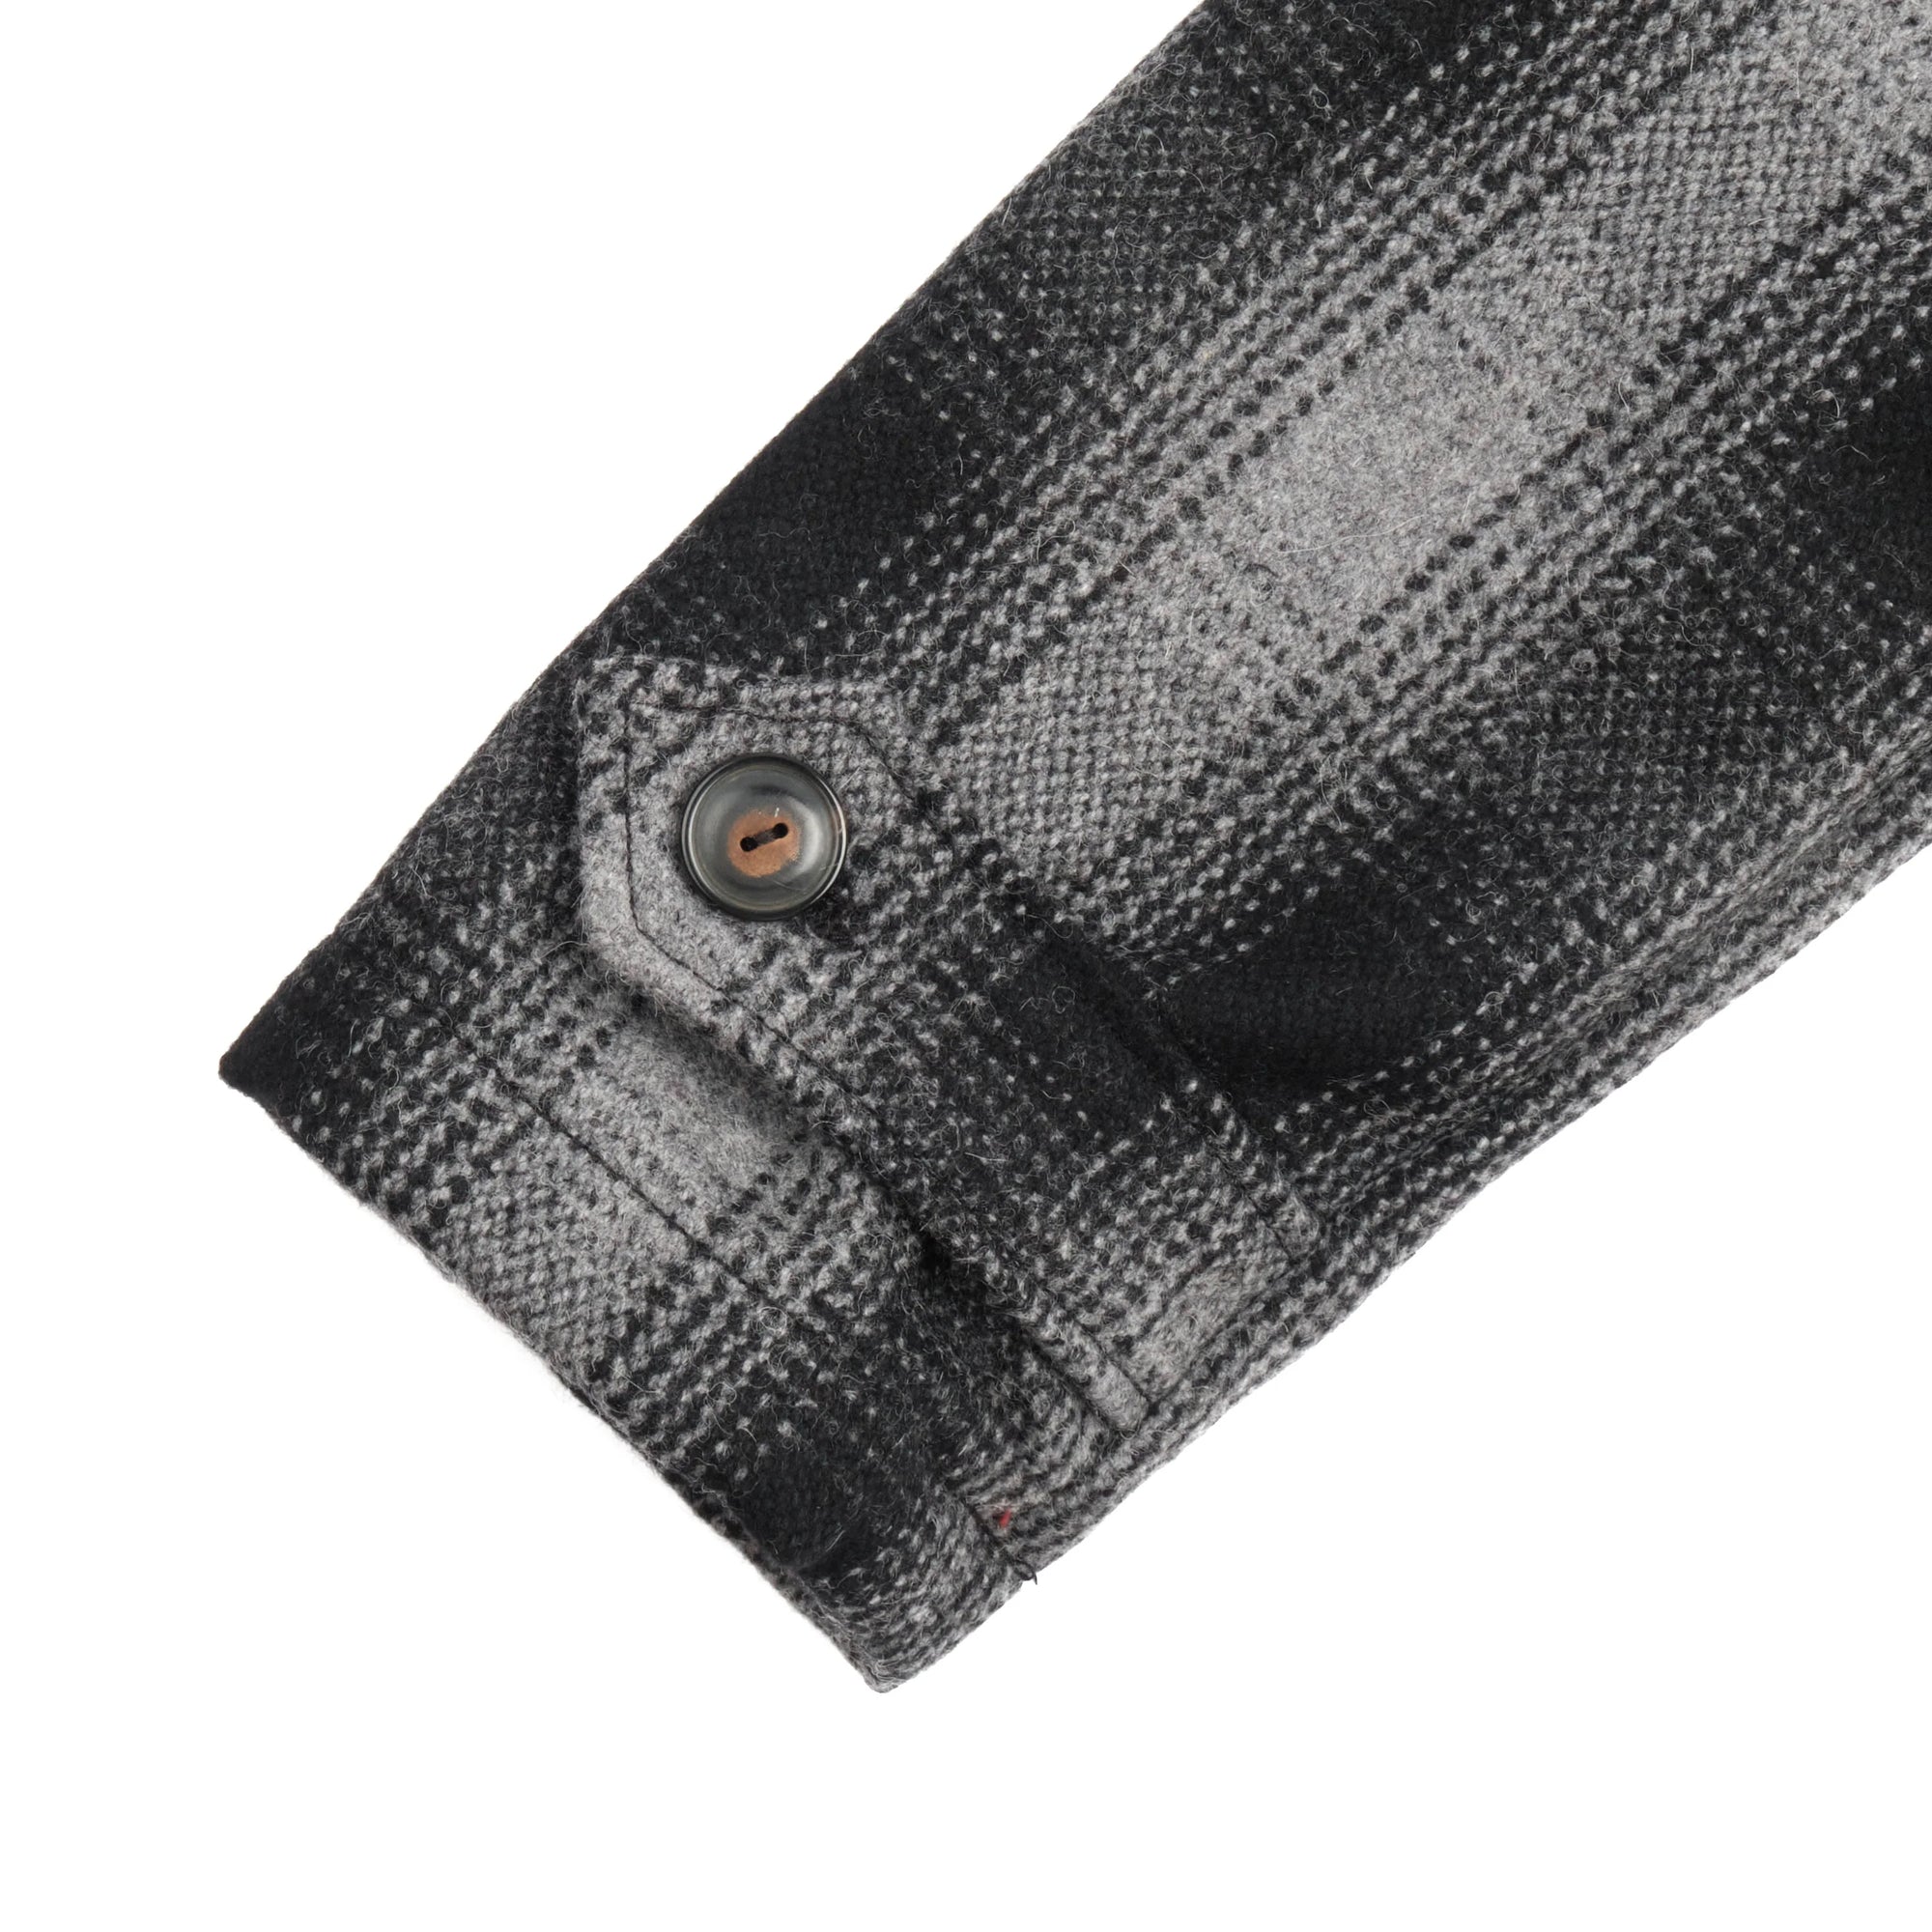 Freenote Cloth Tolgate - Charcoal